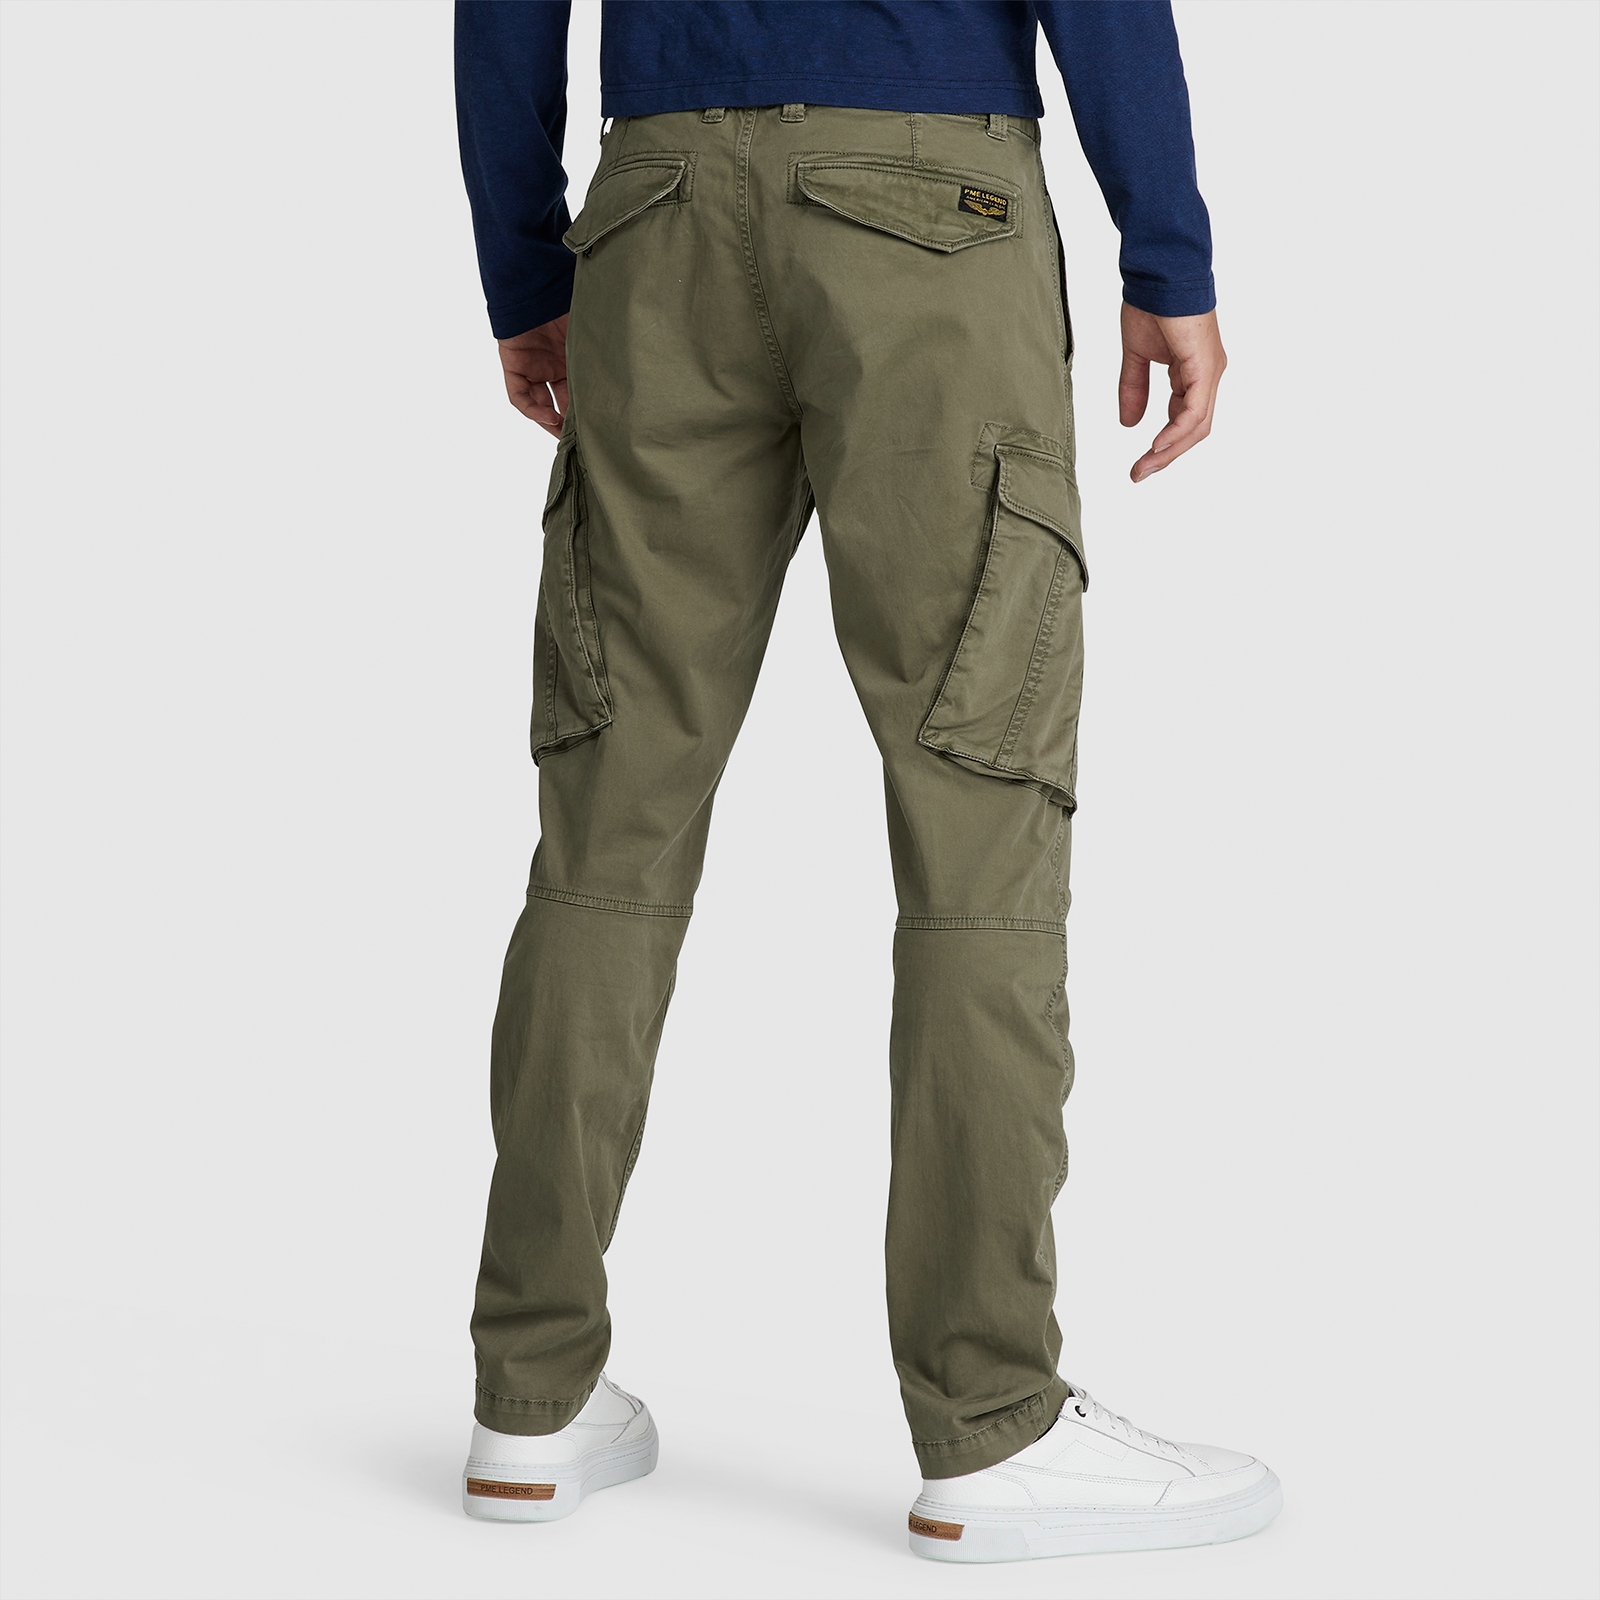 Männer STRETCH CARGO | PME Jeans-Manufaktur TWILL - PTR2202640-6149 | Jeans | Twill | moss Legend Jeans green Cargo | PME Stretch LEGEND